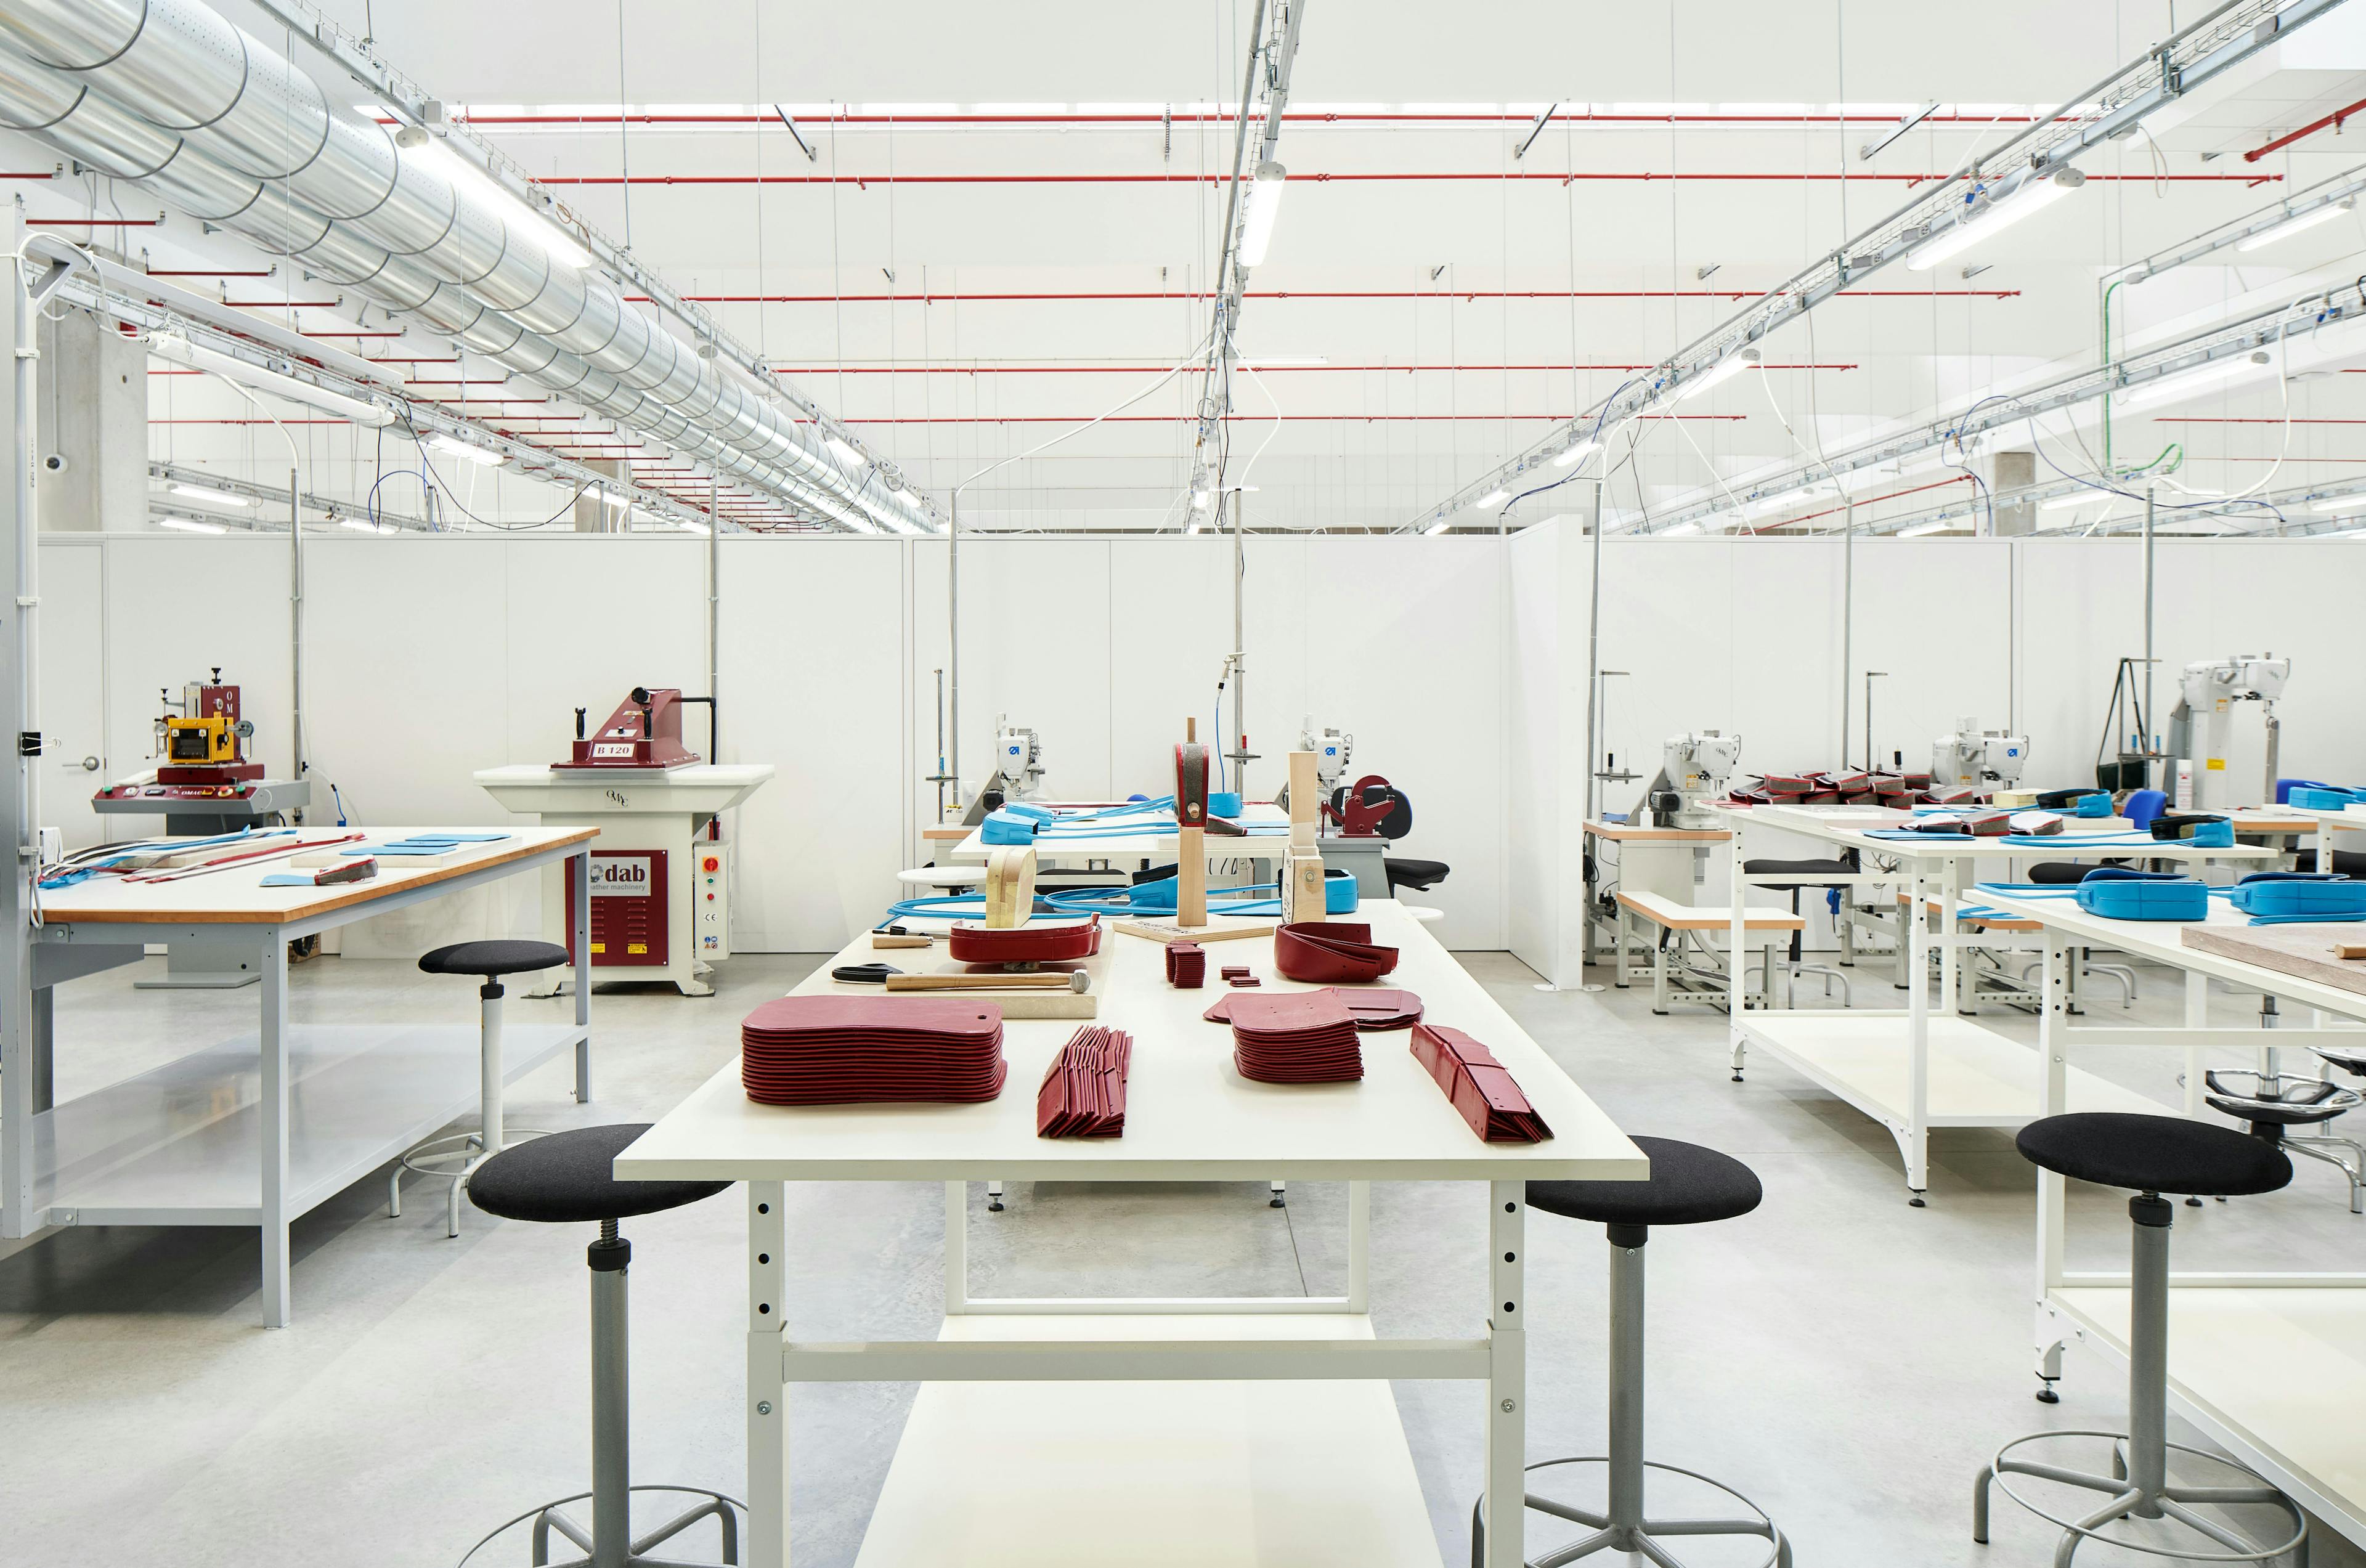 architecture building factory lab desk furniture table manufacturing workshop laboratory